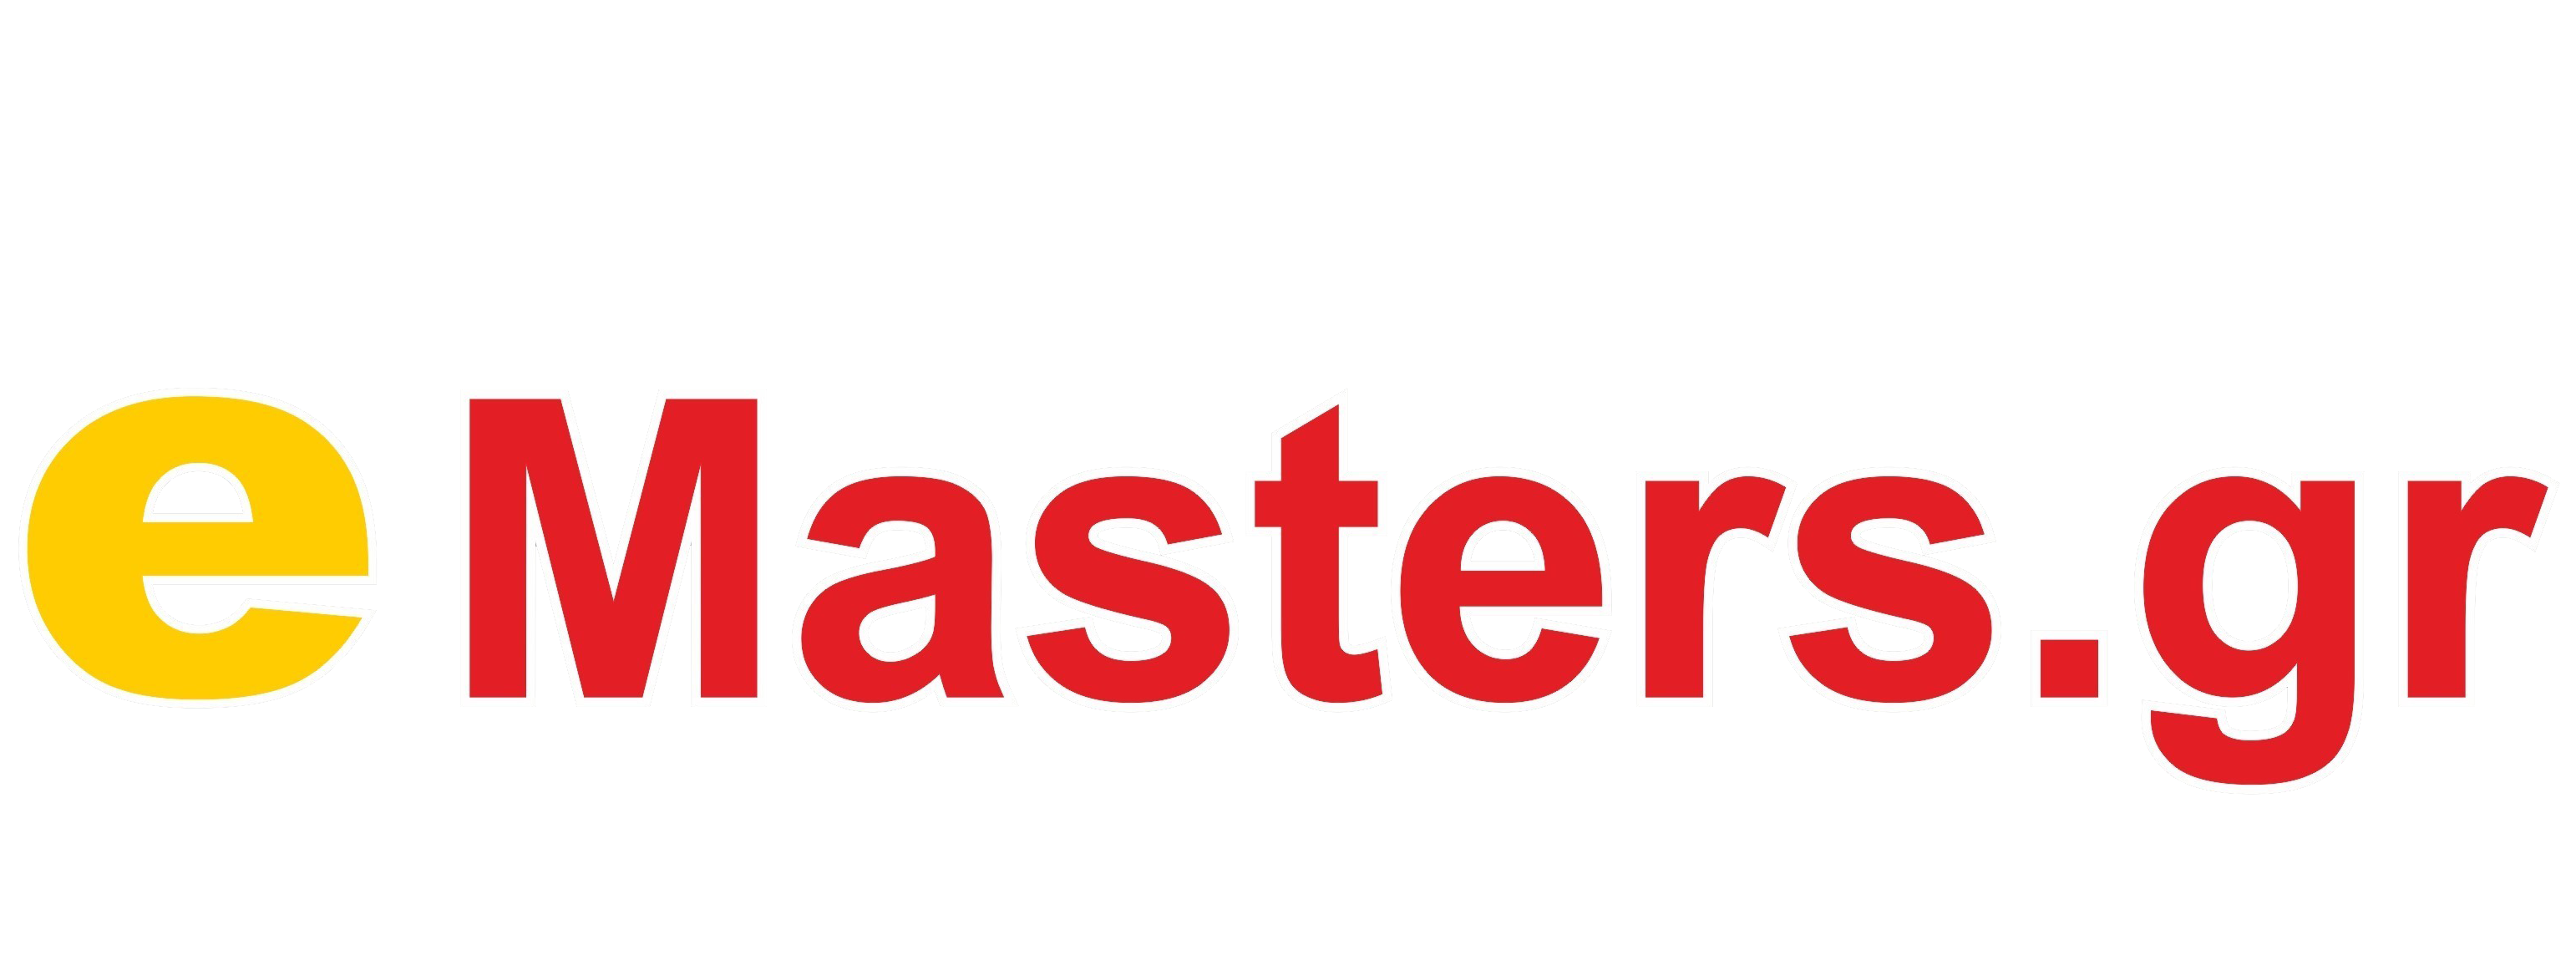 eMasters.gr, Service Κινητών, Υπολογιστών Παλλήνη